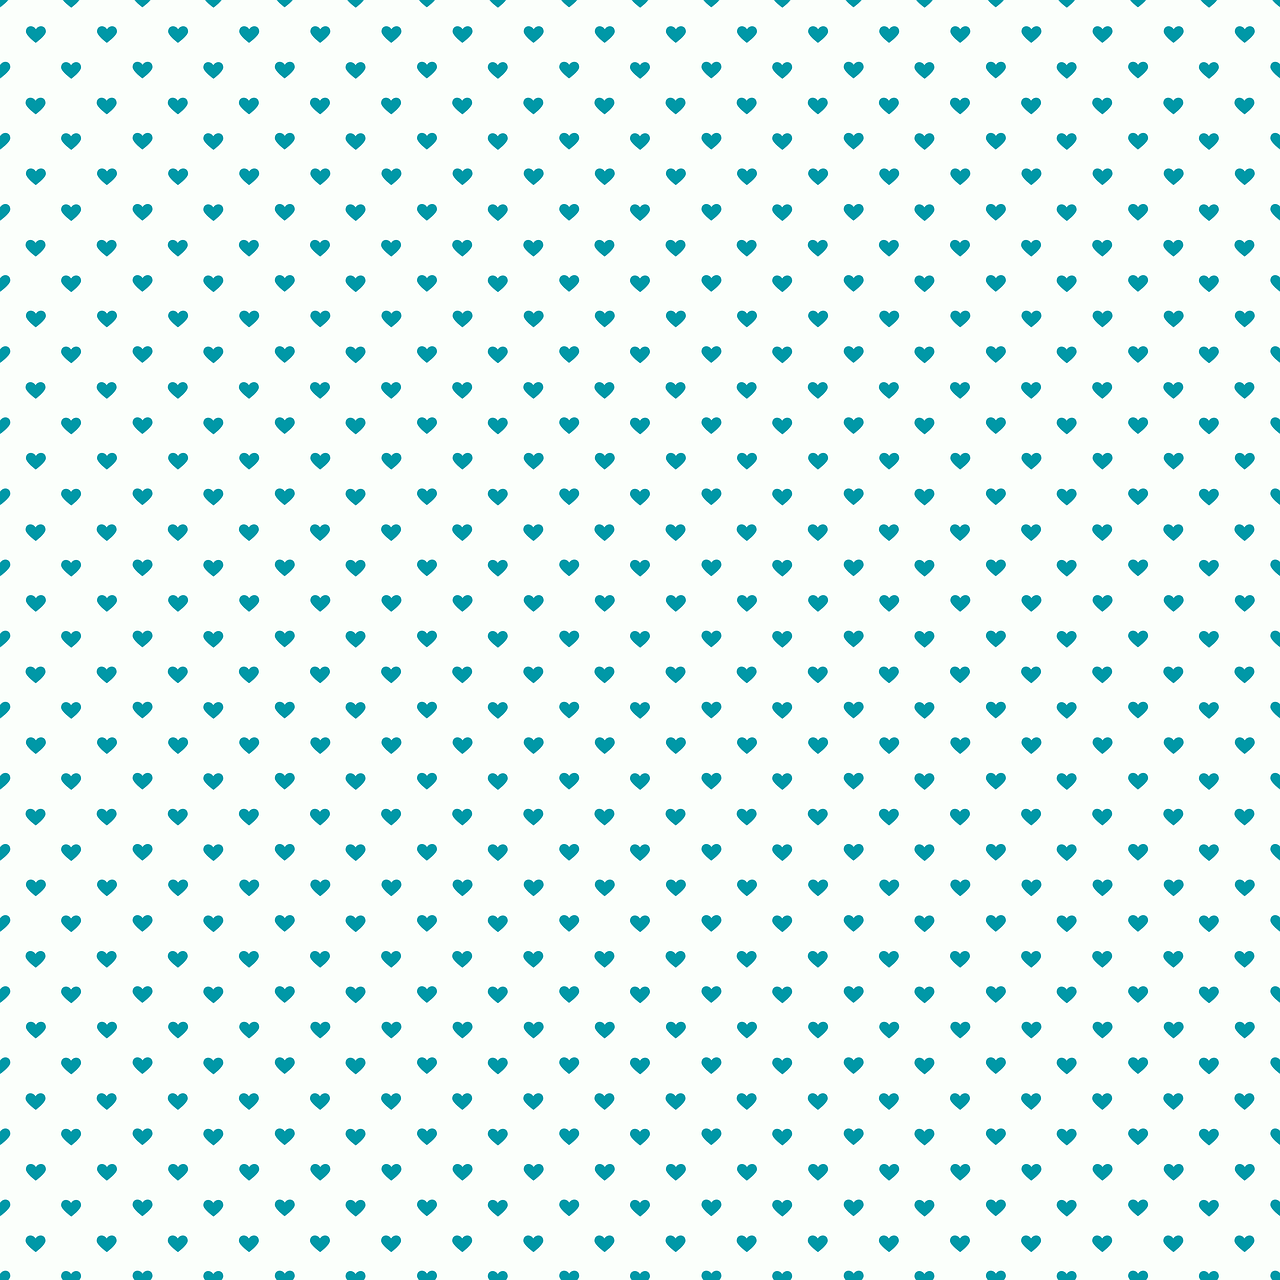 a blue heart pattern on a white background, tumblr, hq 4k phone wallpaper, disneyland background, dark teal, digital screenshot